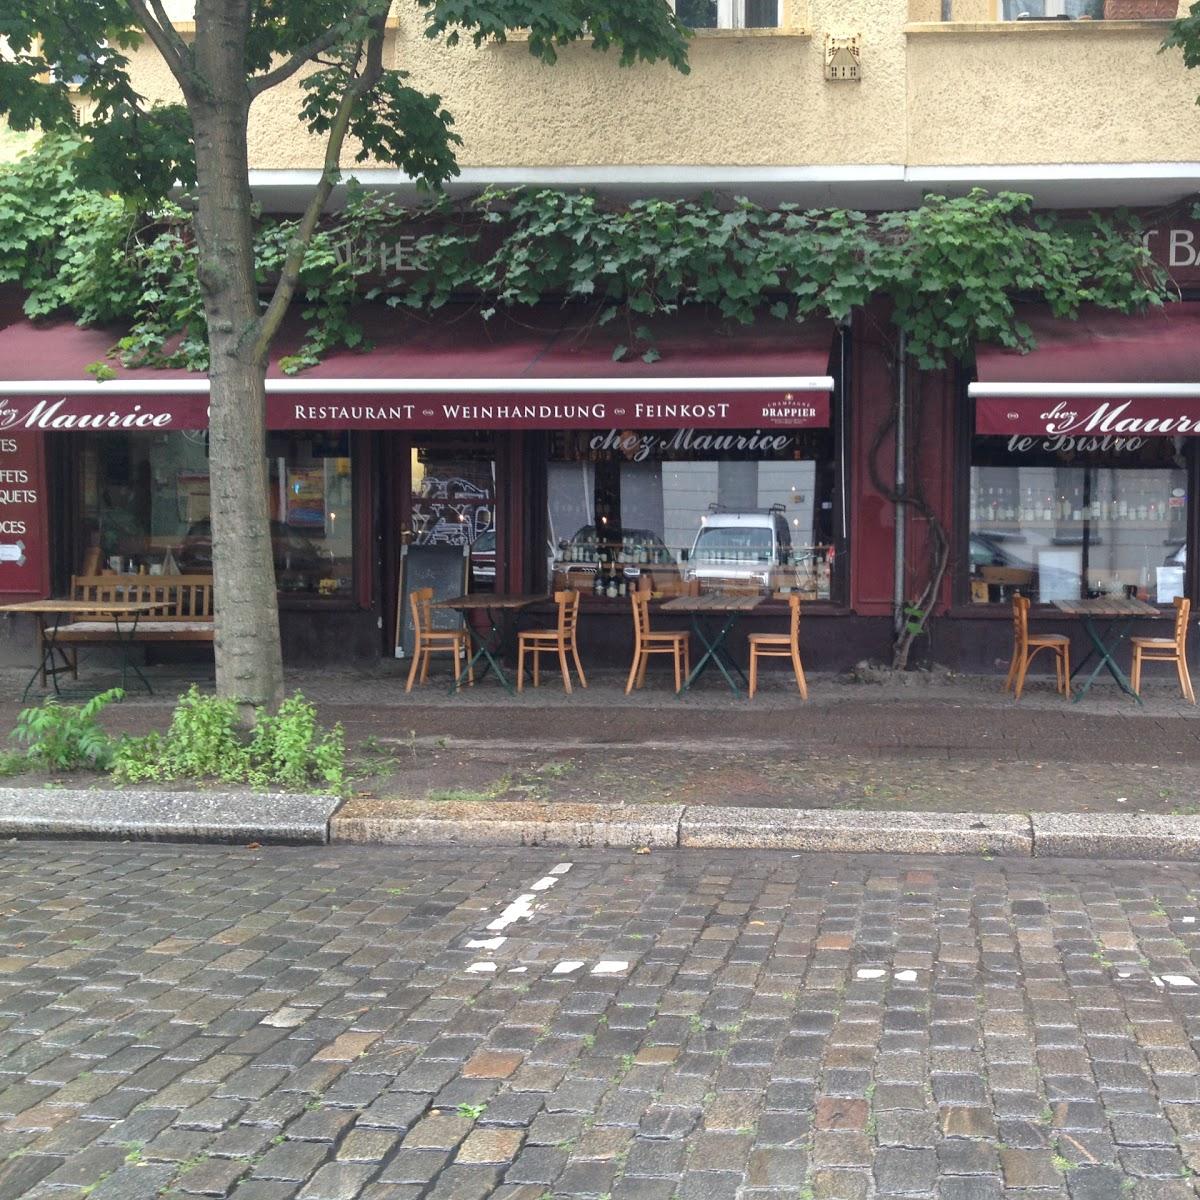 Restaurant "Chez Maurice" in Berlin